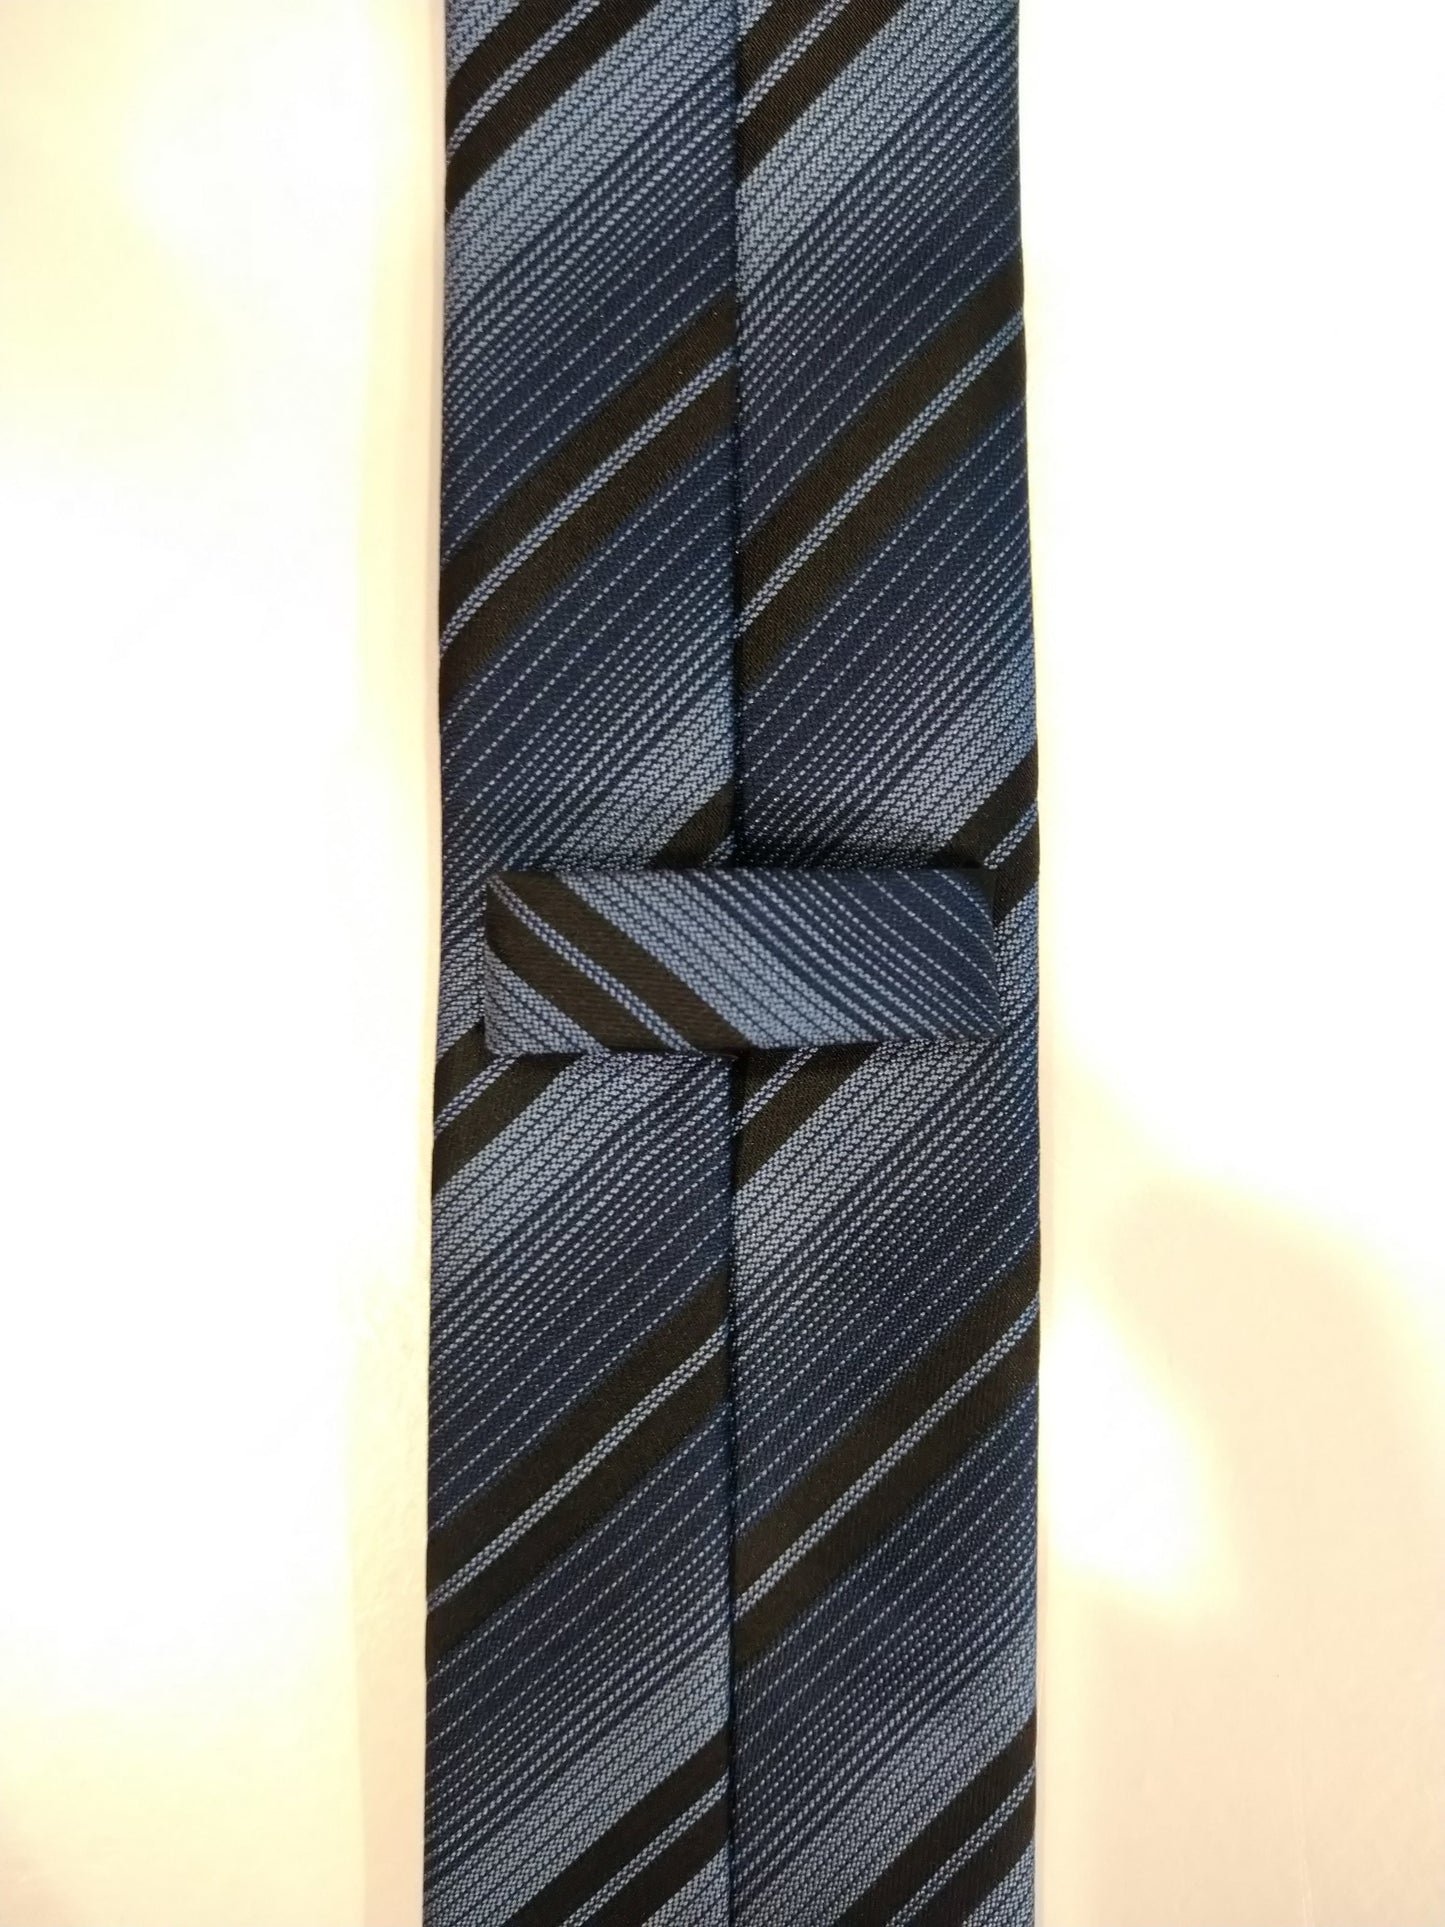 Cedar Wood State narrow polyester tie. Blue black striped.